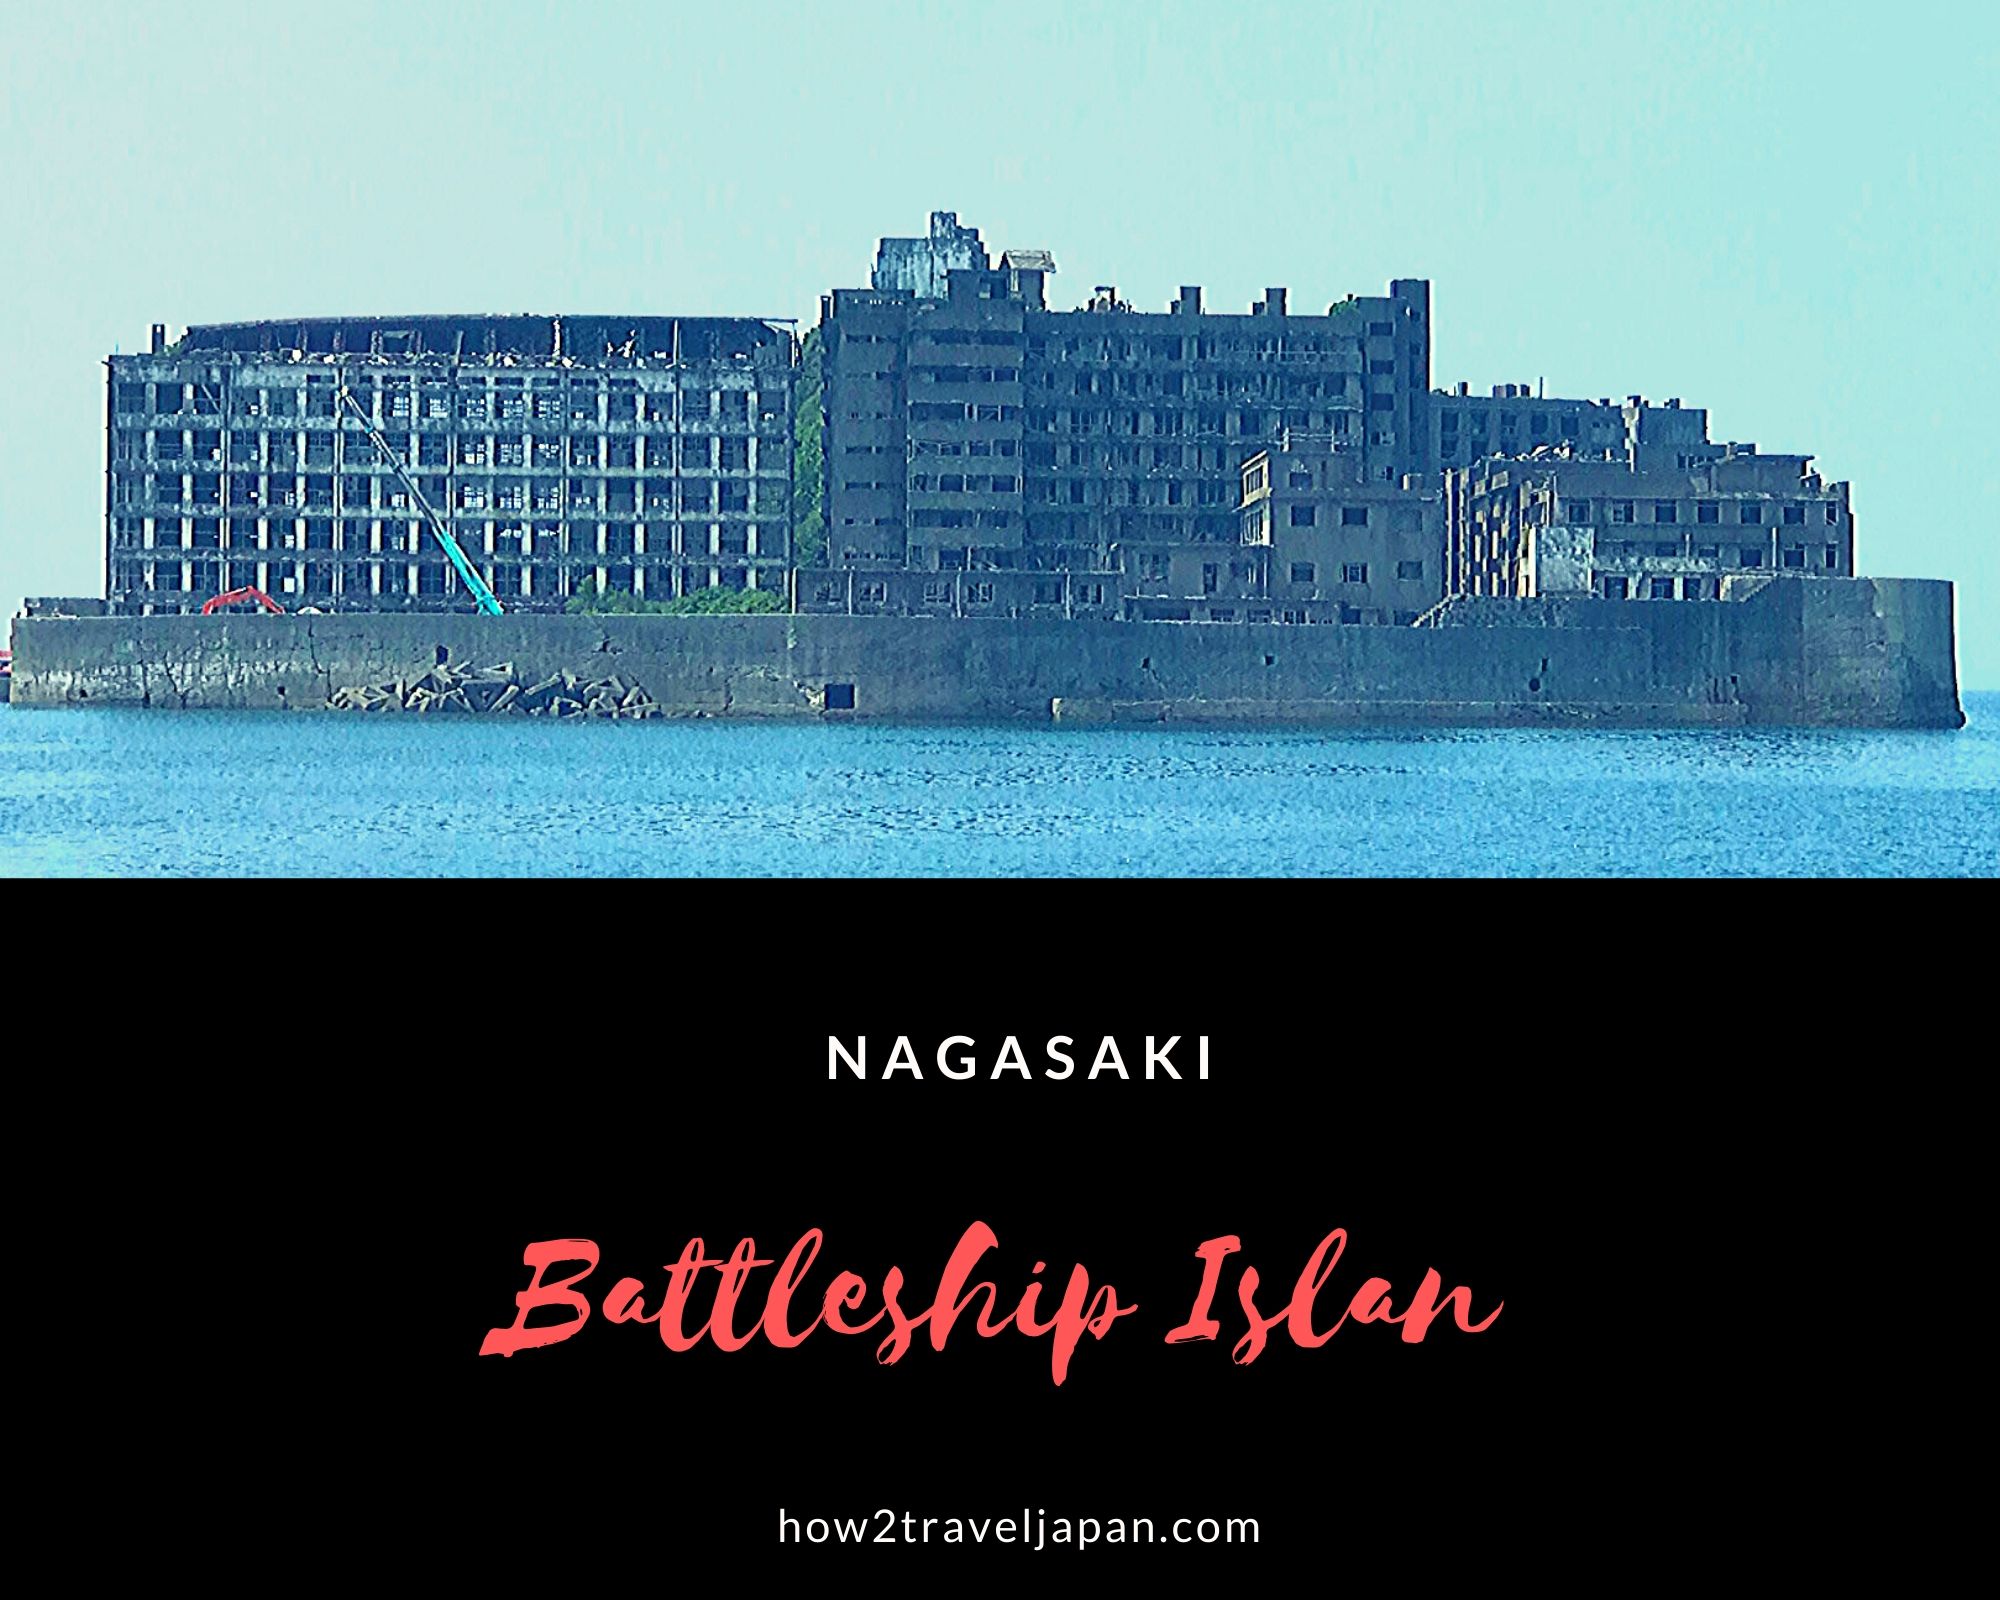 You are currently viewing Battleship Island – Gunkanjima in Nagasaki